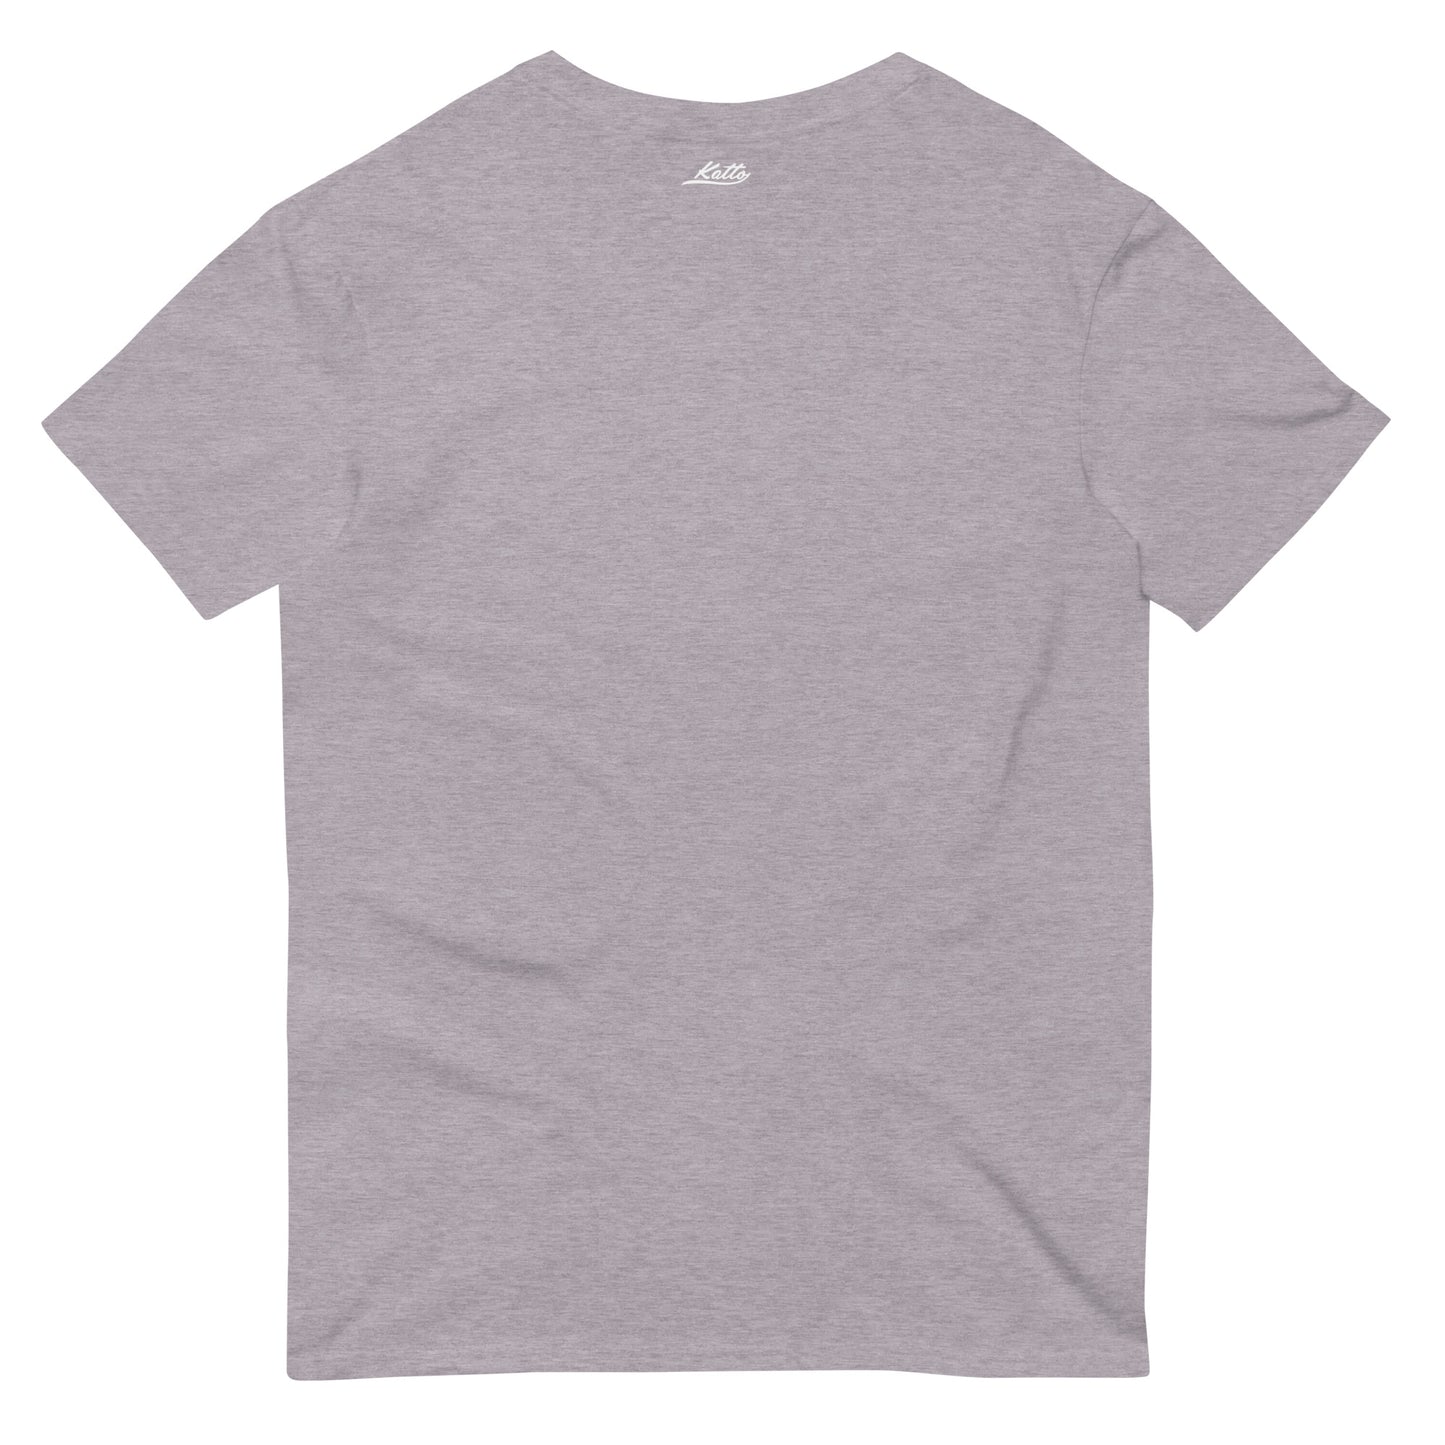 "Katto" Cat (S) Short-Sleeve T-Shirt